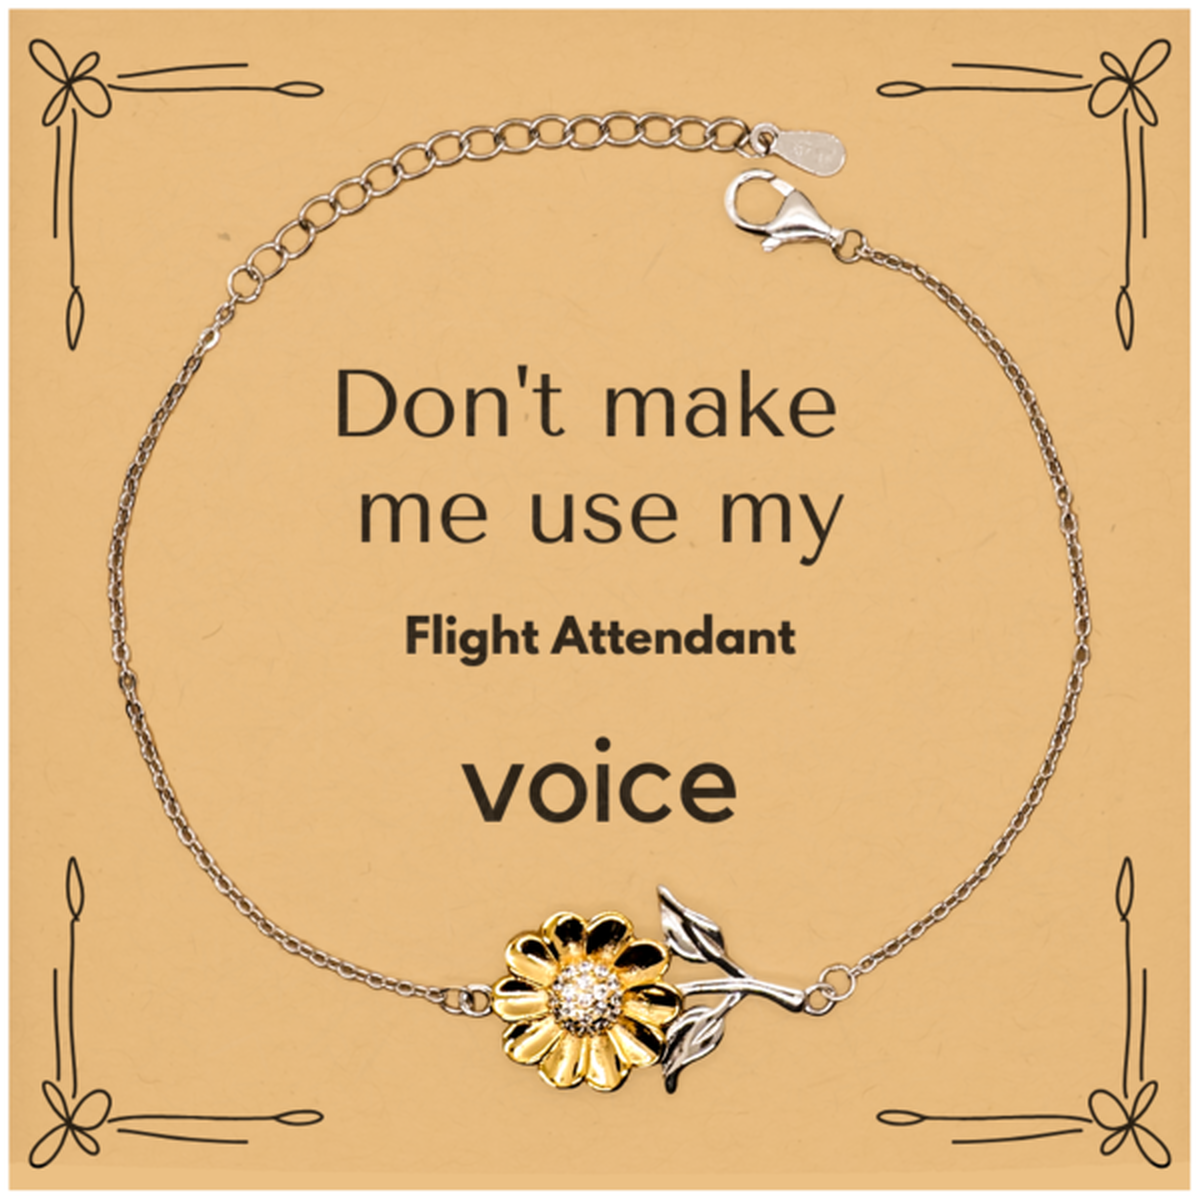 Don't make me use my Flight Attendant voice, Sarcasm Flight Attendant Card Gifts, Christmas Flight Attendant Sunflower Bracelet Birthday Unique Gifts For Flight Attendant Coworkers, Men, Women, Colleague, Friends